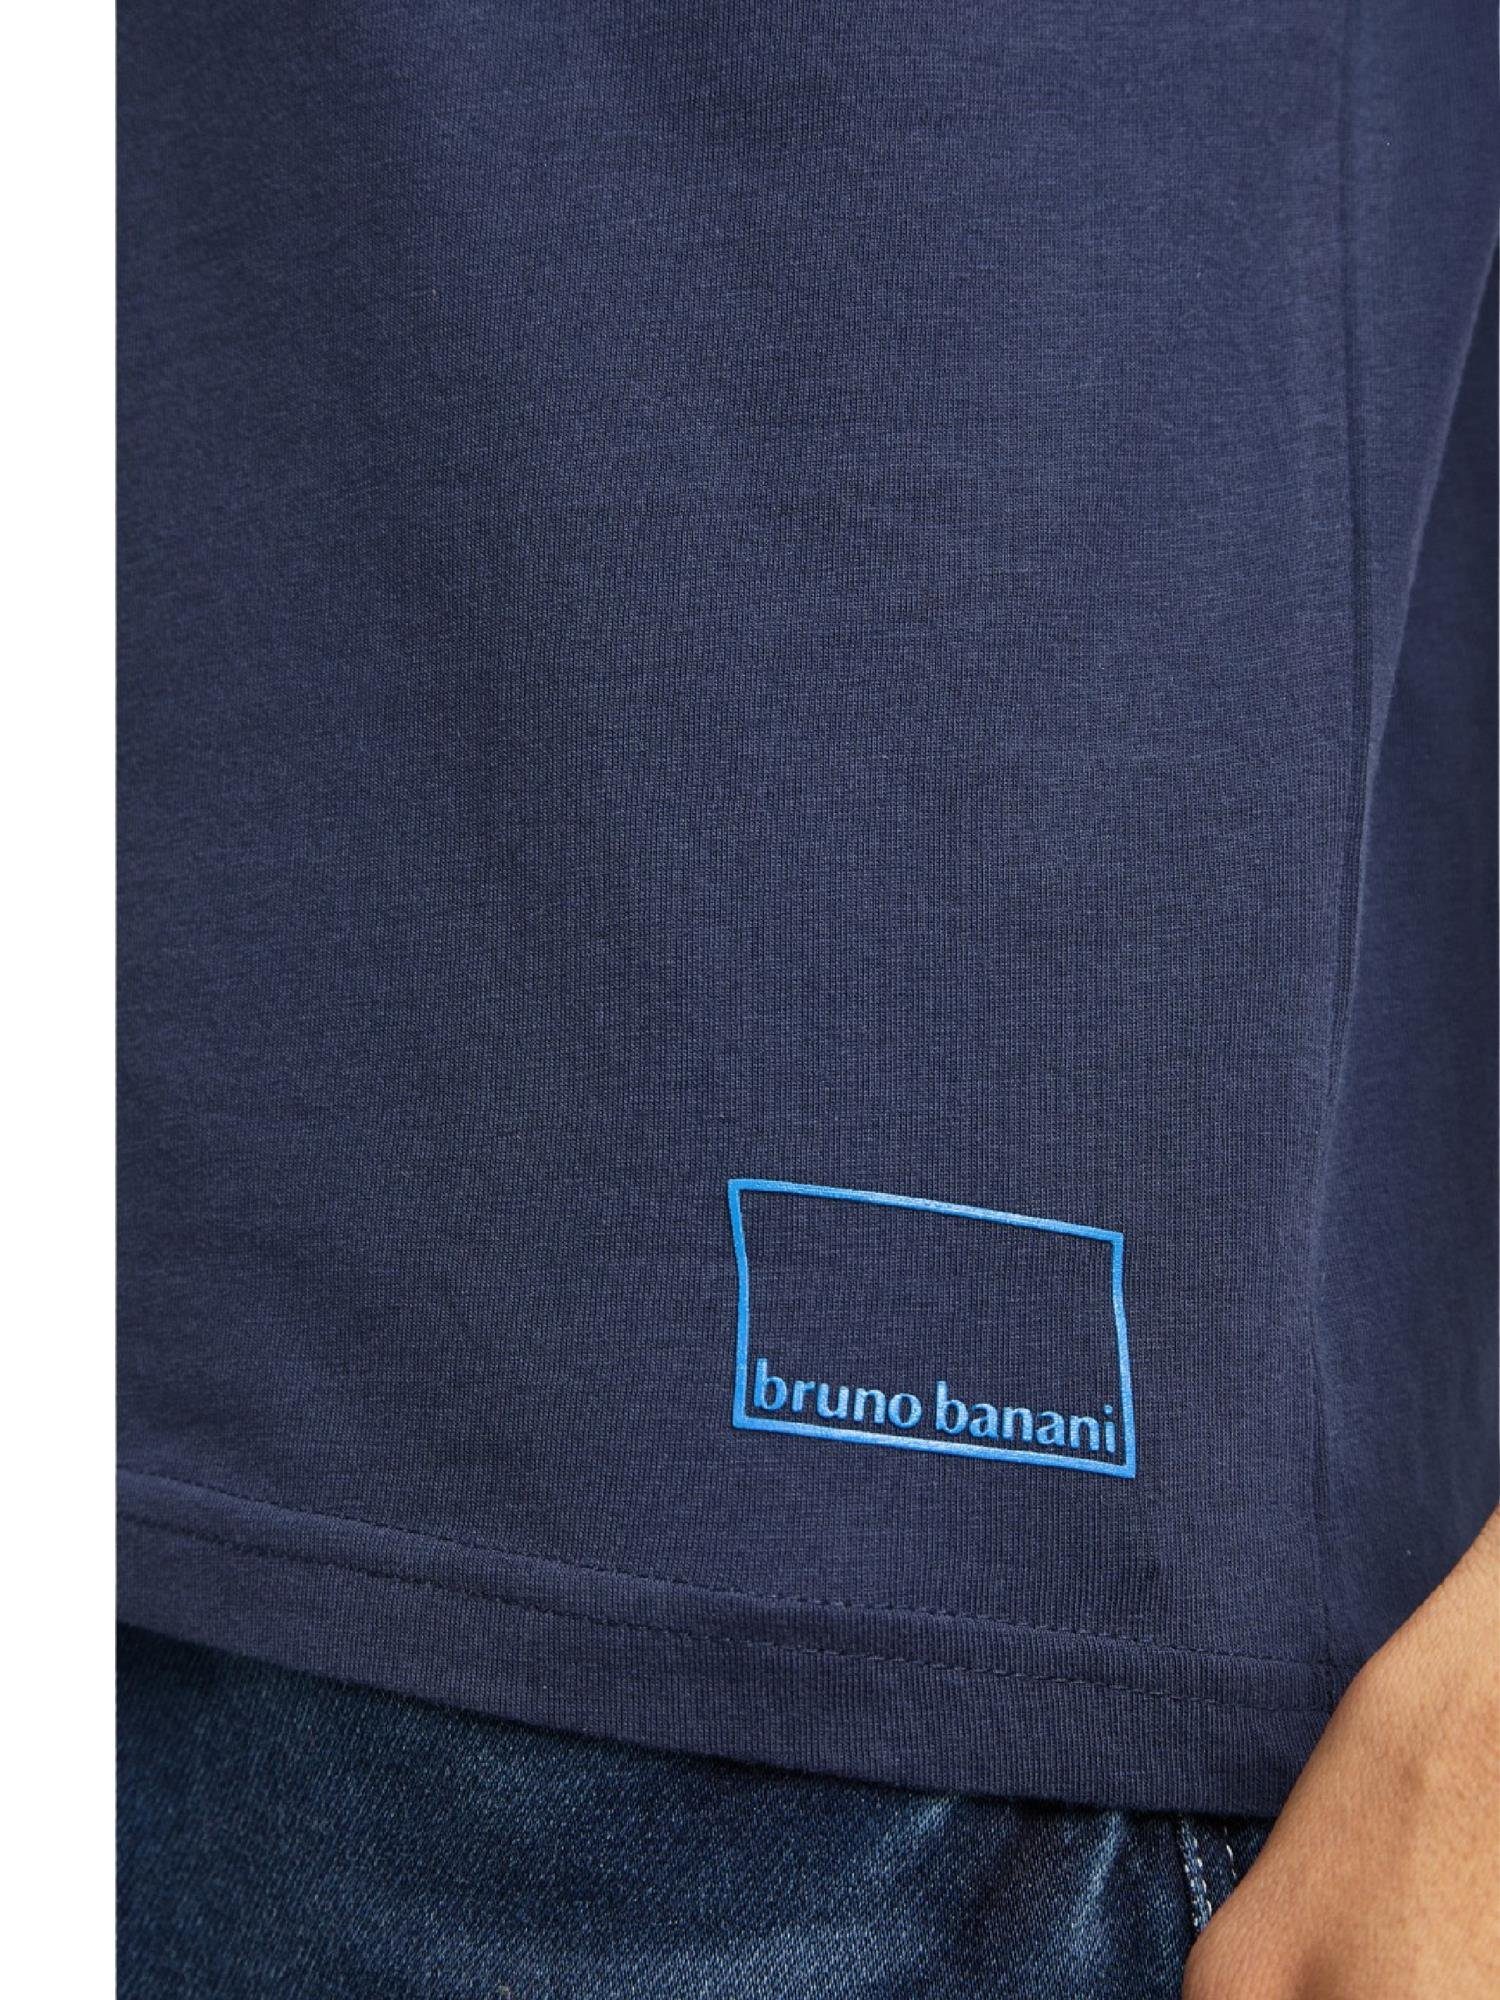 Bruno SHAW Banani T-Shirt